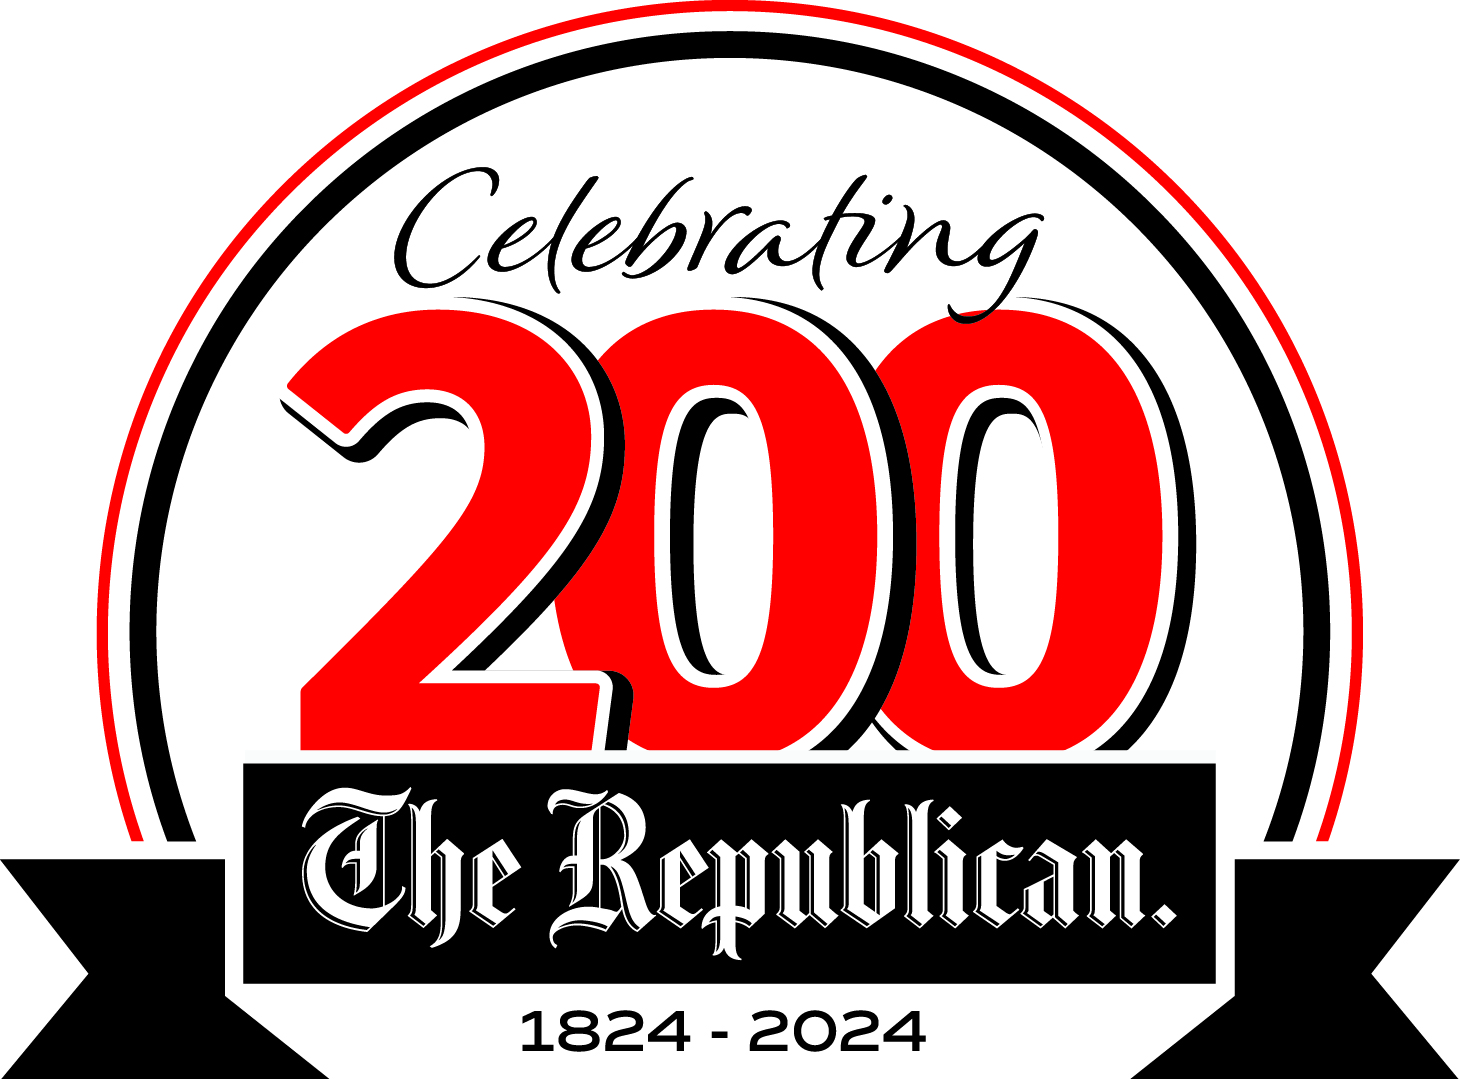 Celebrating 200 The Republican Logo.jpg